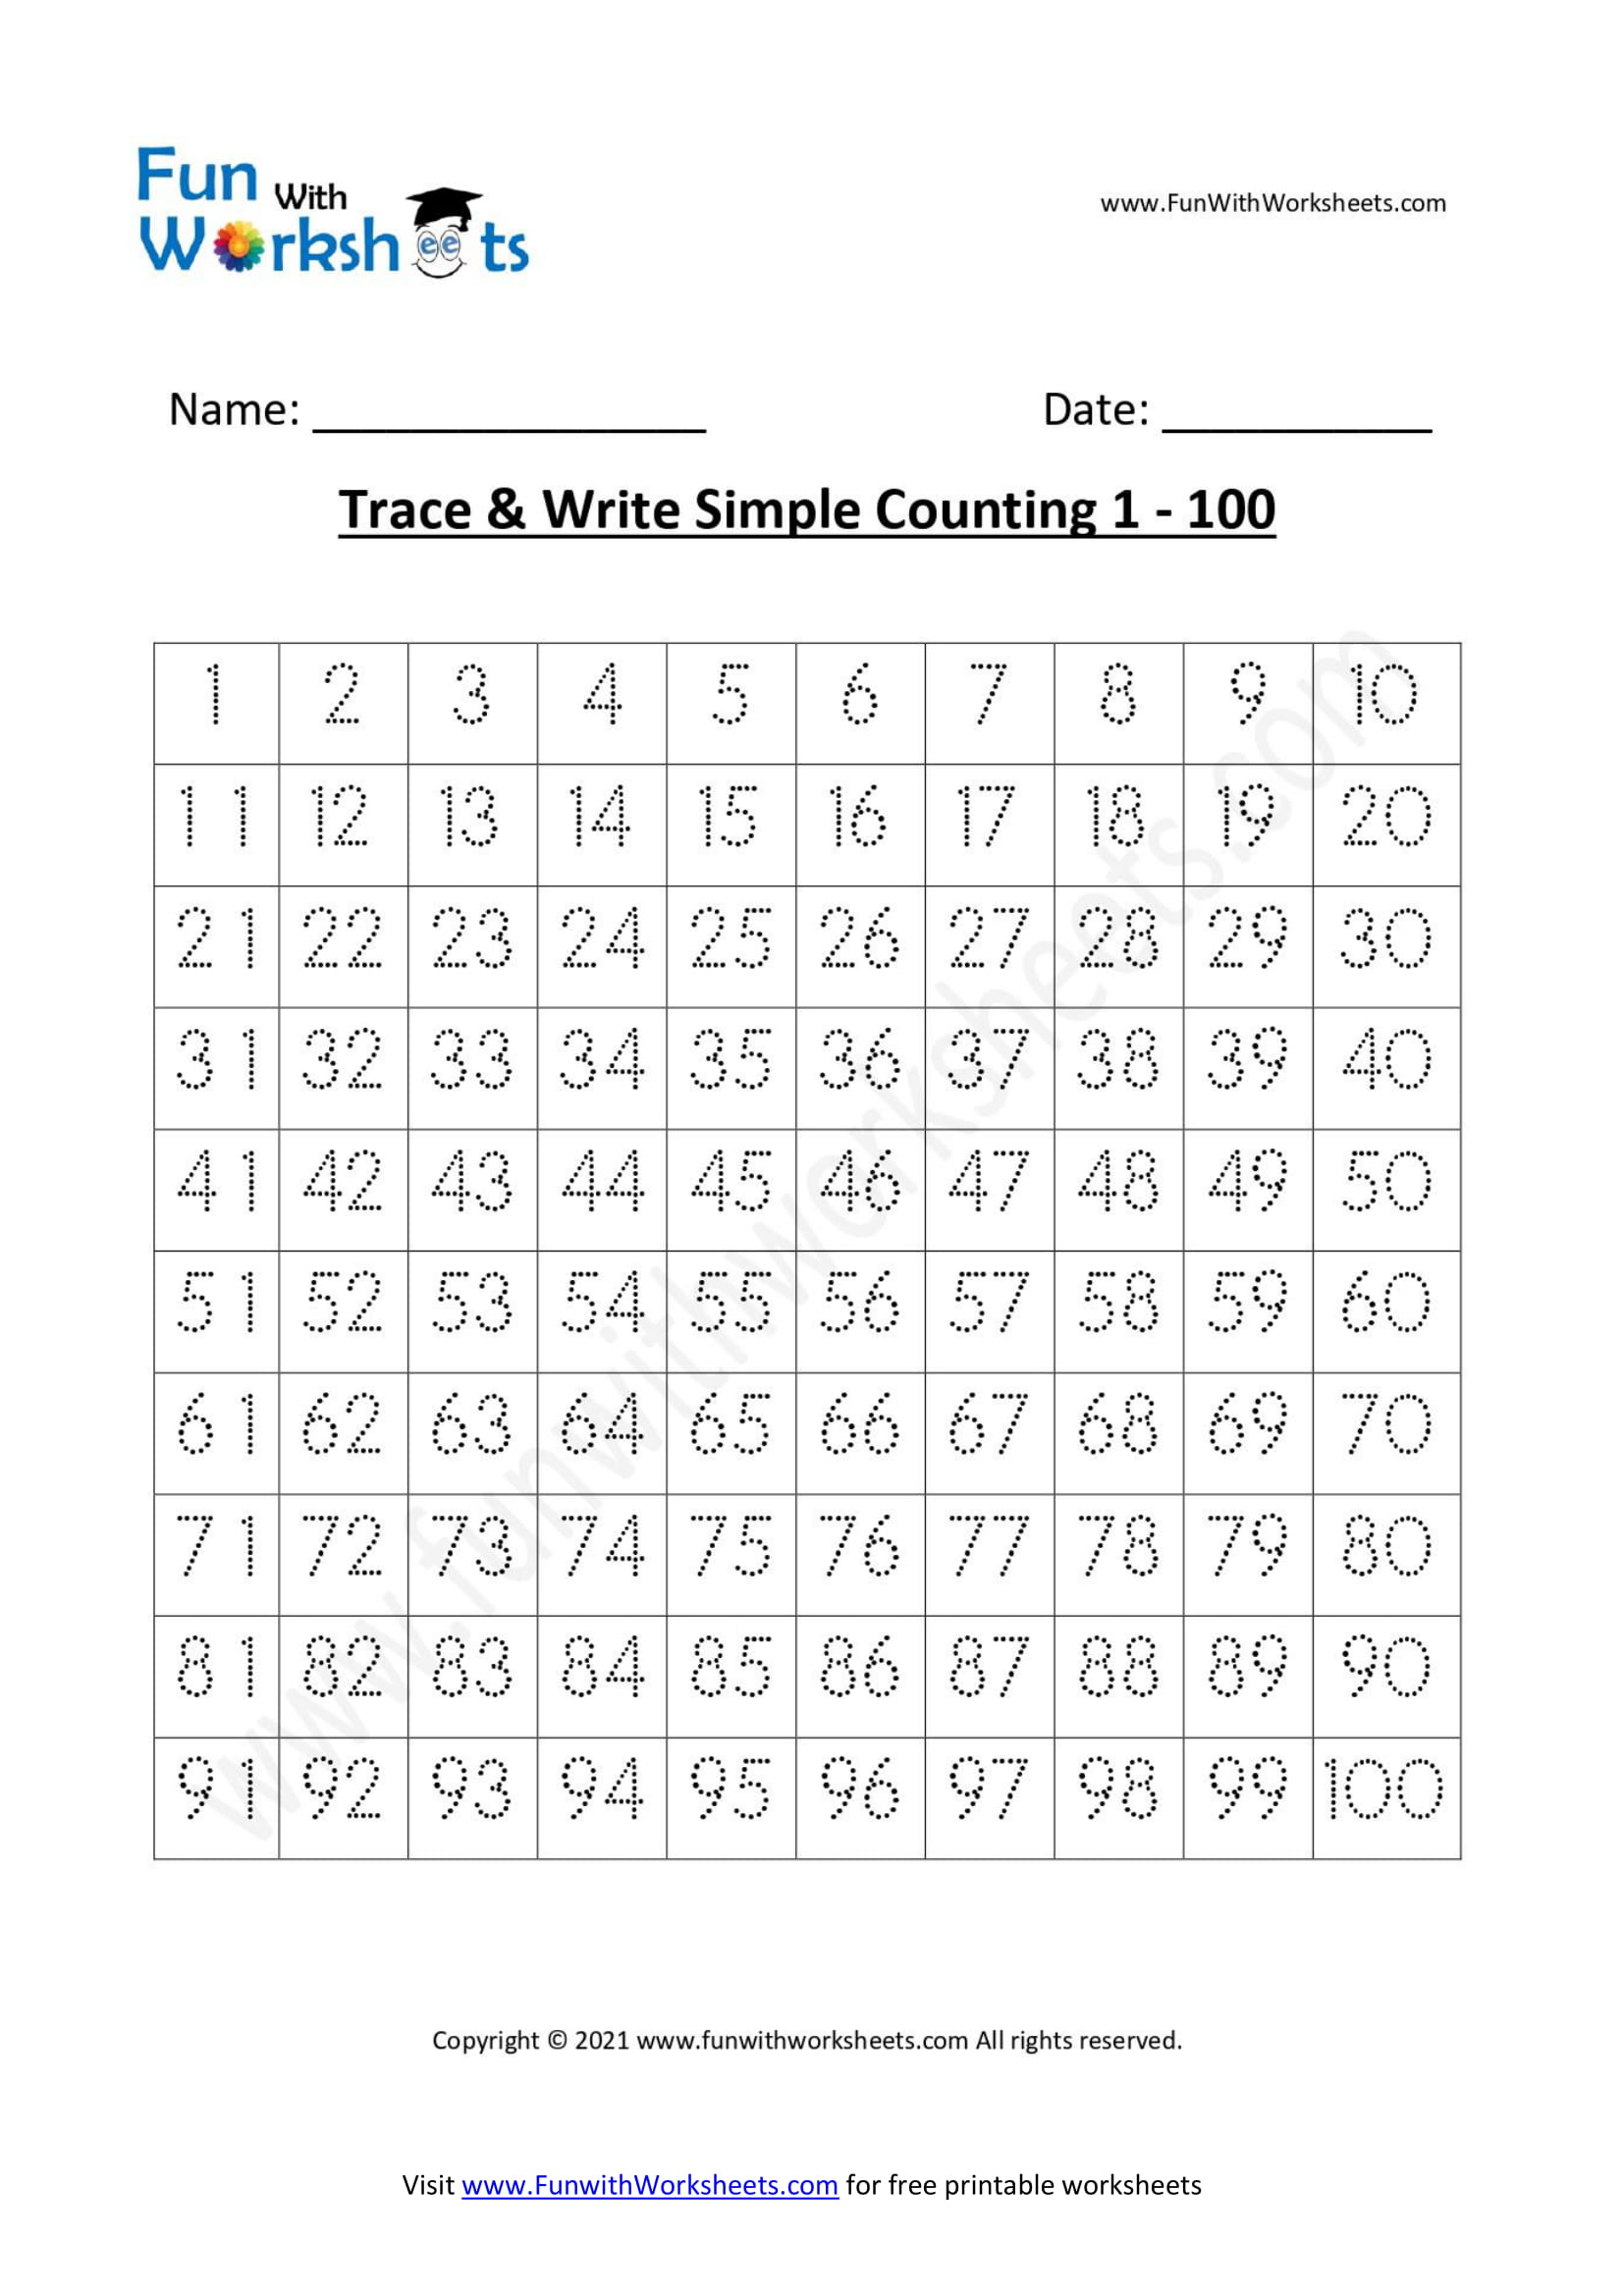 tracing-numbers-1-100-free-printable